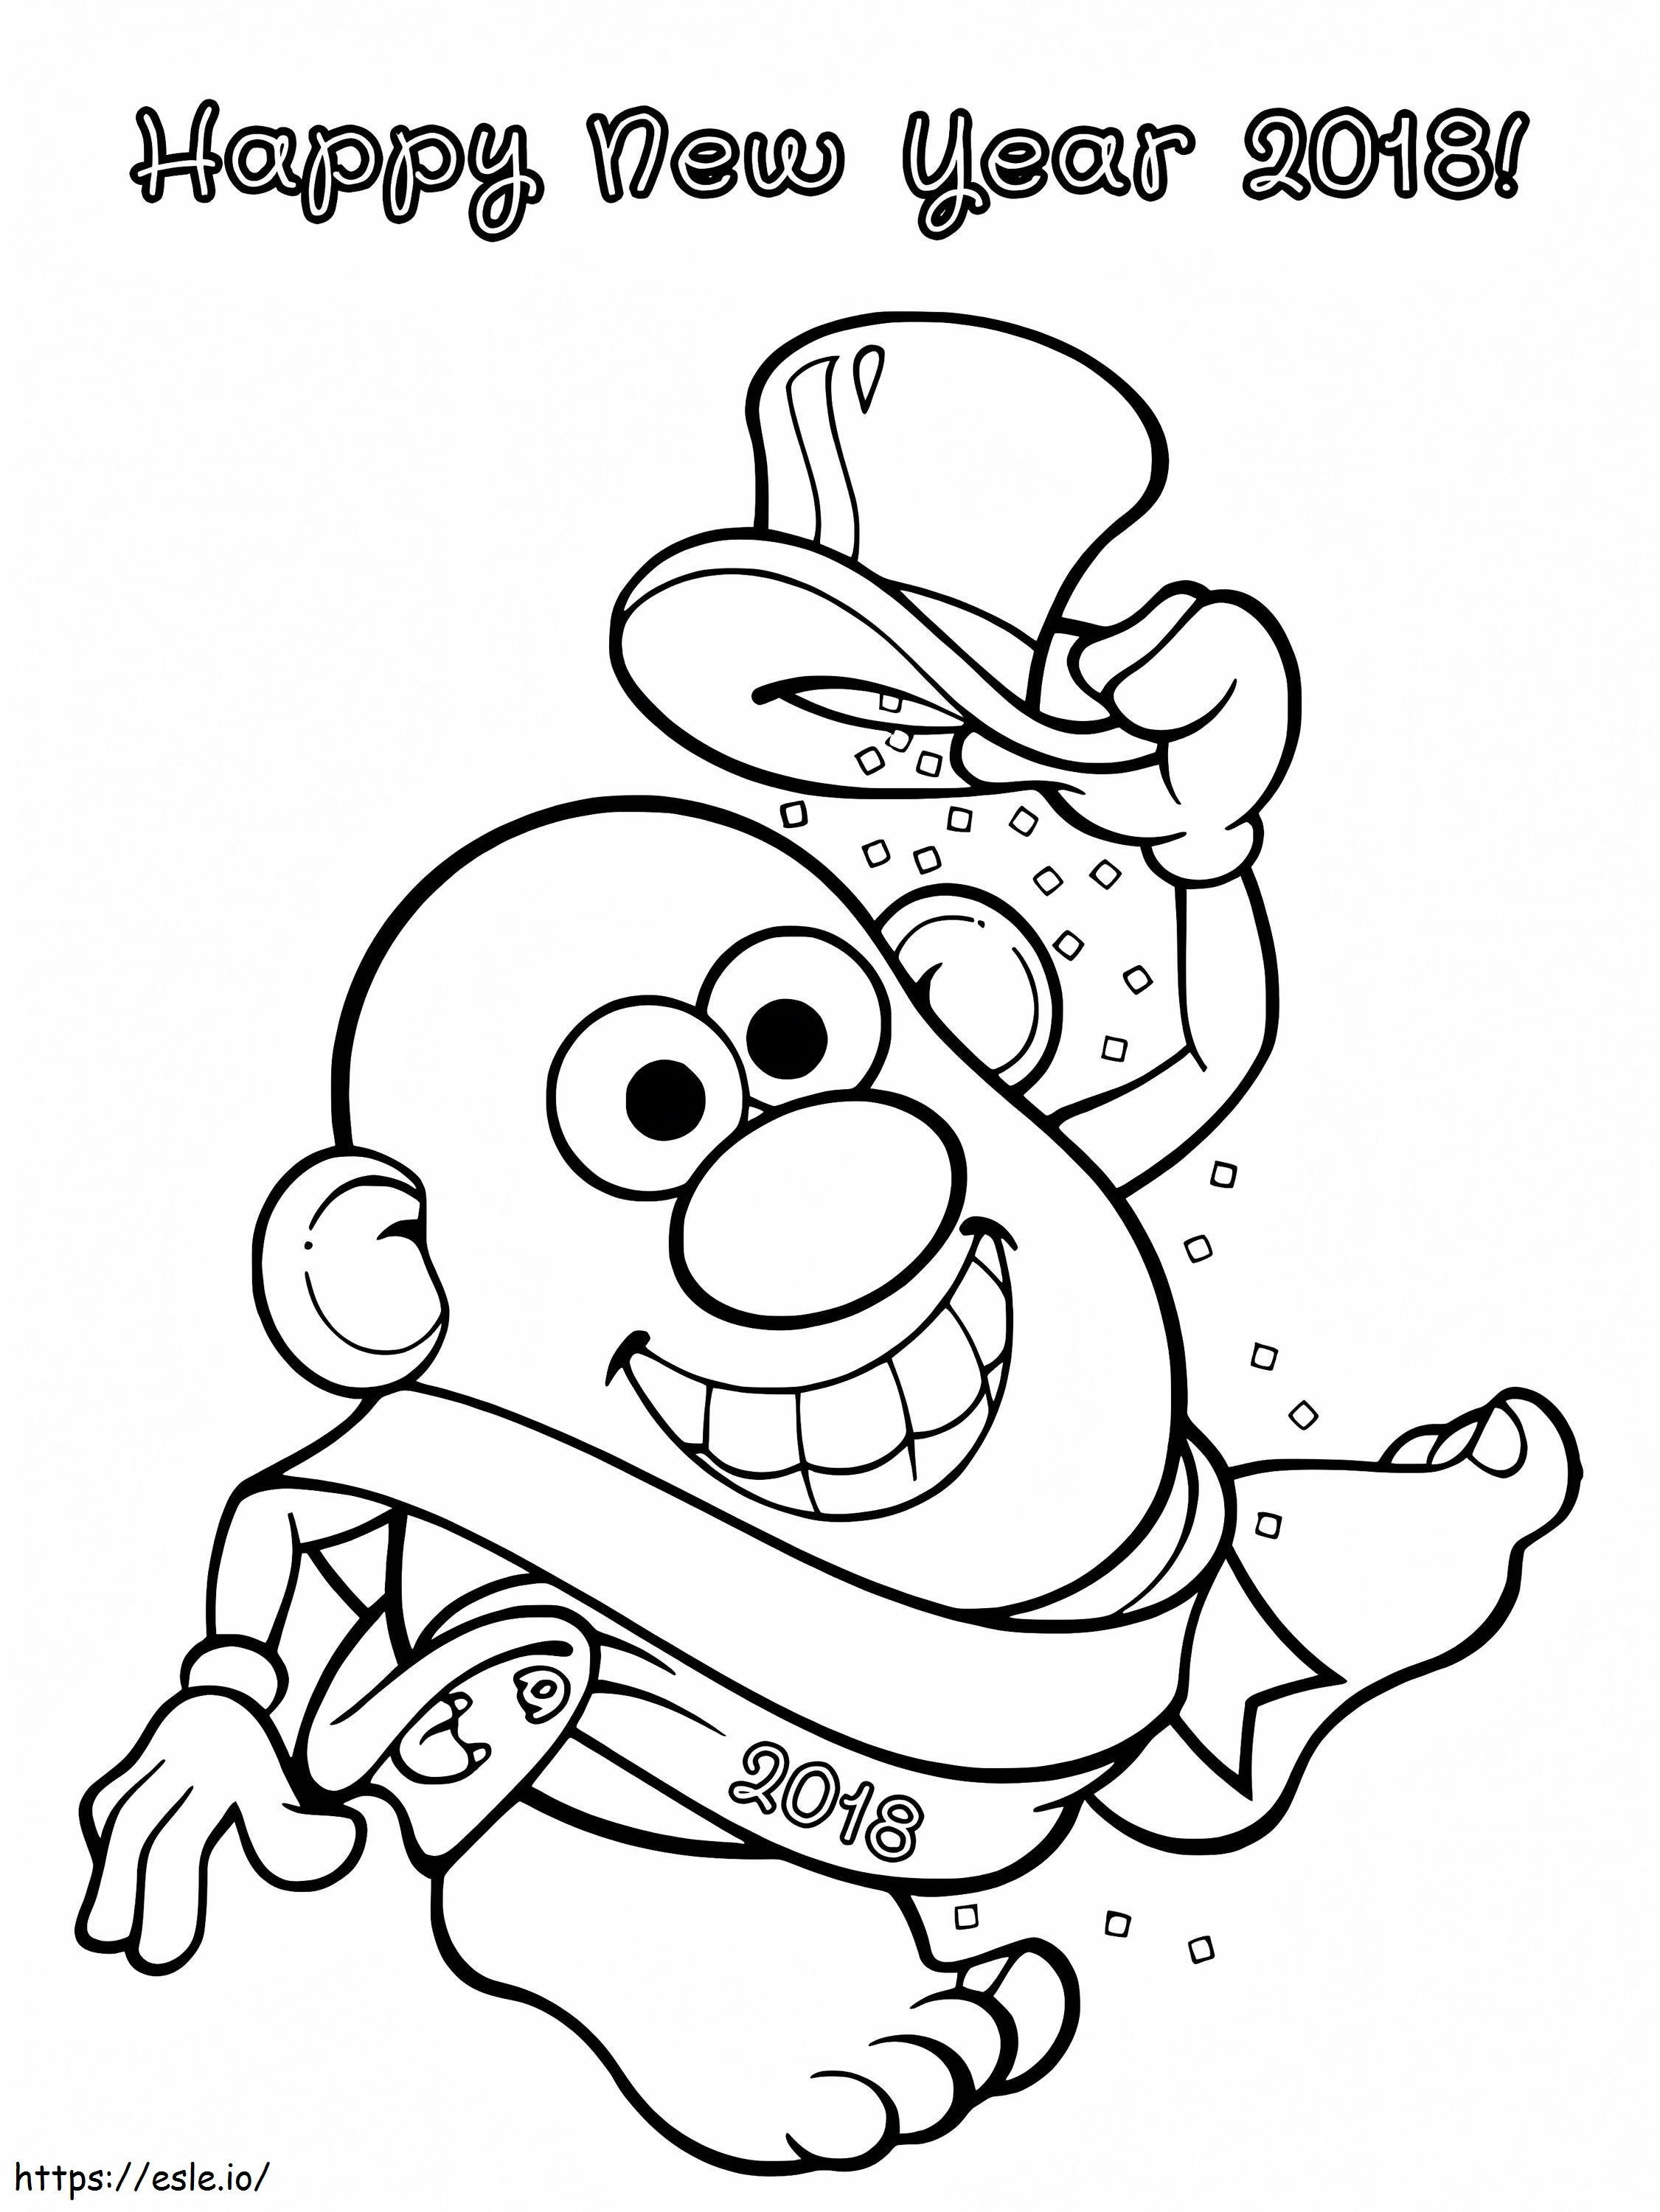 Happy New Year Mr. Potato Head coloring page